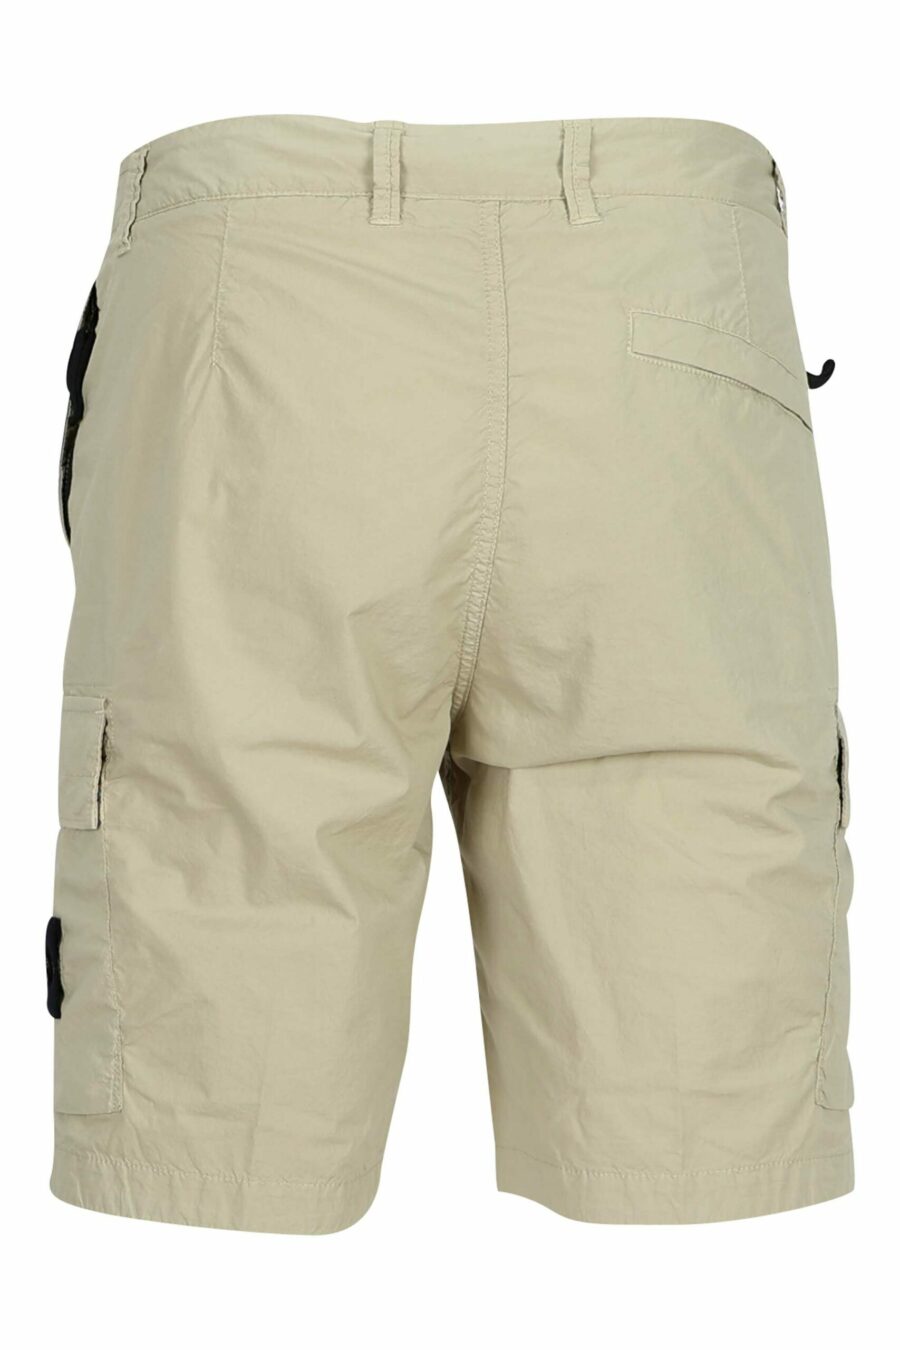 Pantalón corto color arena estilo cargo con logo parche brújula - 8052572916298 2 scaled